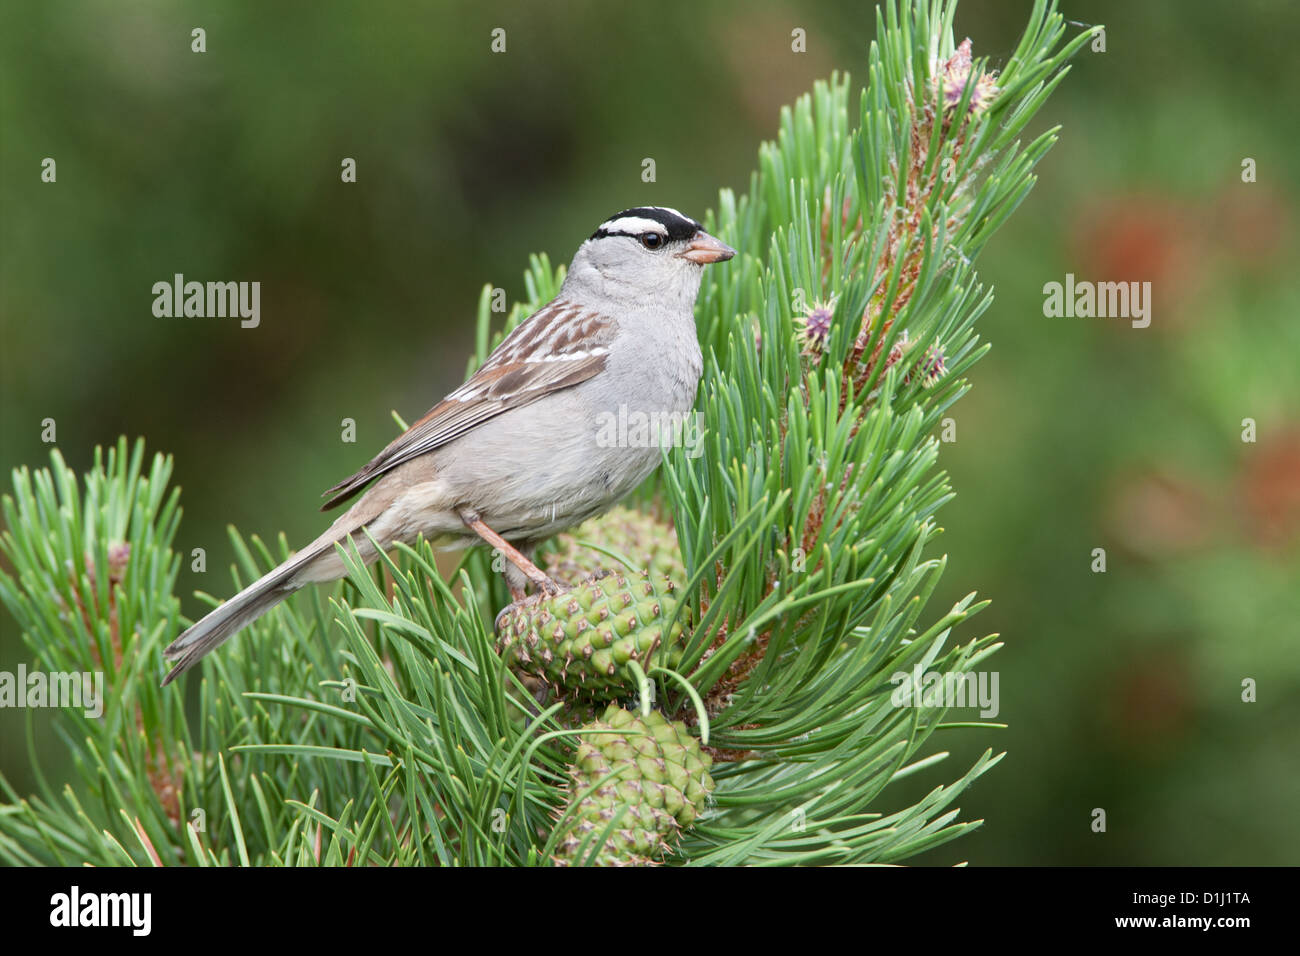 White-winged Sparrow birds bird songbird songbirds Ornithology Science Nature Wildlife Environment sparrows Stock Photo